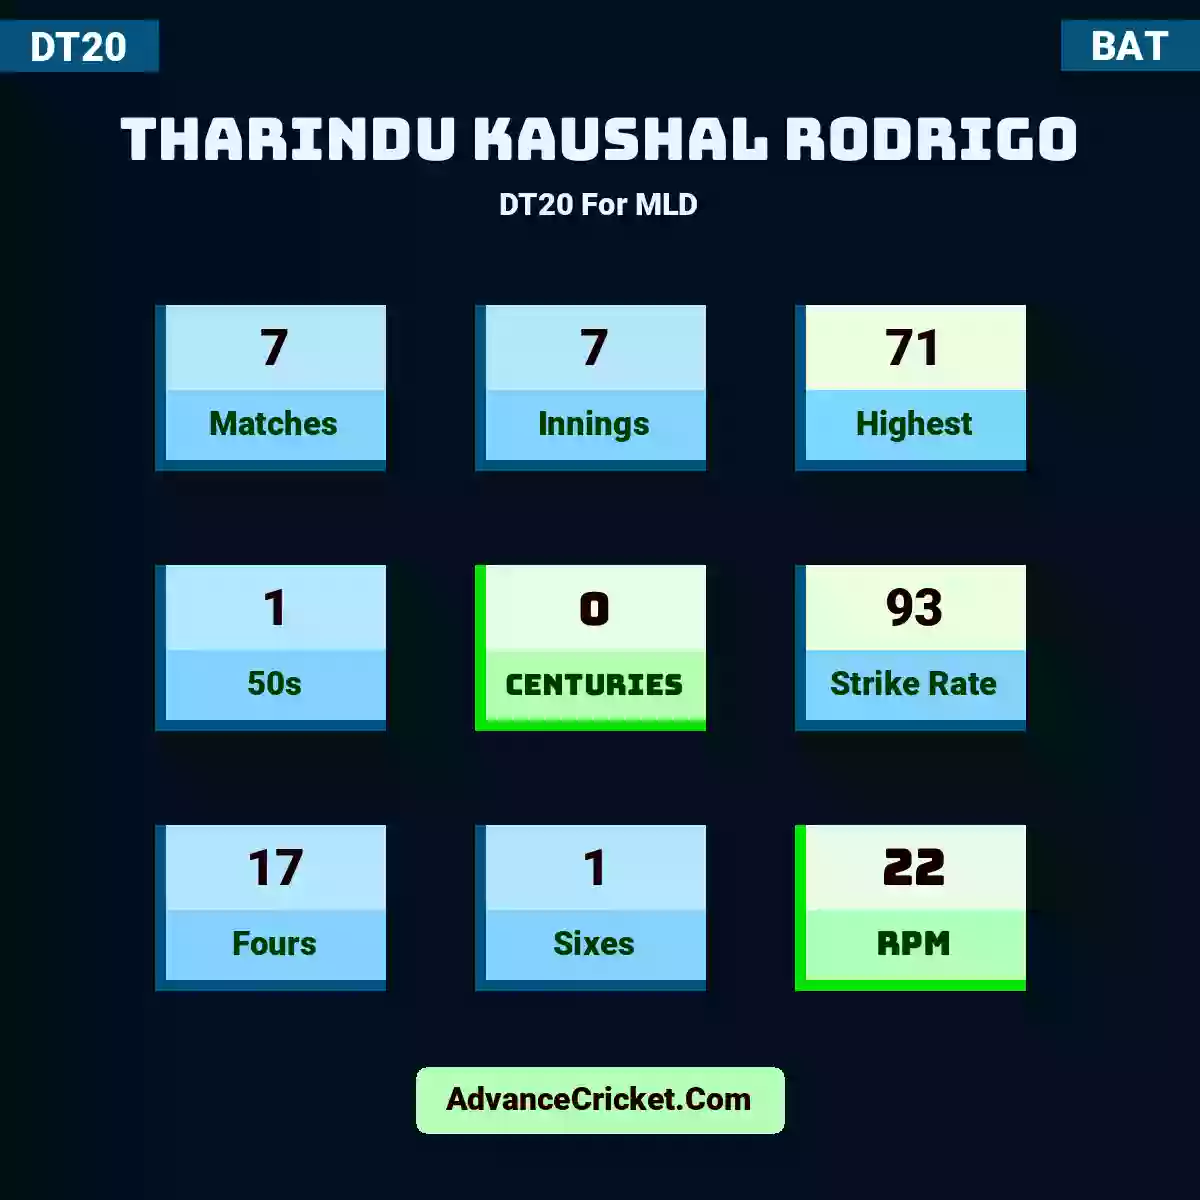 Tharindu Kaushal Rodrigo DT20  For MLD, Tharindu Kaushal Rodrigo played 7 matches, scored 71 runs as highest, 1 half-centuries, and 0 centuries, with a strike rate of 93. T.Kaushal.Rodrigo hit 17 fours and 1 sixes, with an RPM of 22.